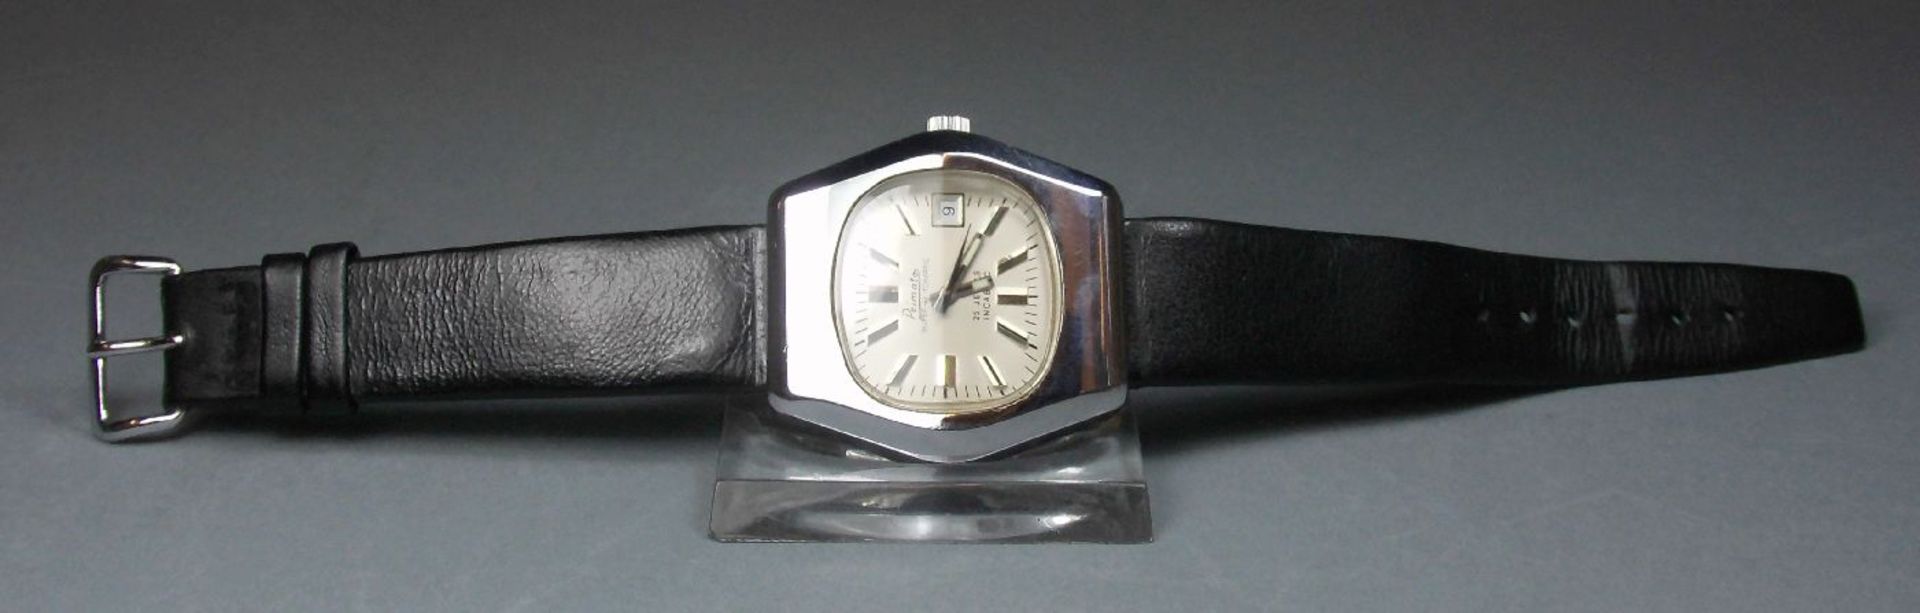 ARMBANDUHR: PRIMATO SUPER-AUTOMATIC / wristwatch, Manufaktur Ewald Fleck & Co. KG / Pforzheim. - Bild 2 aus 7